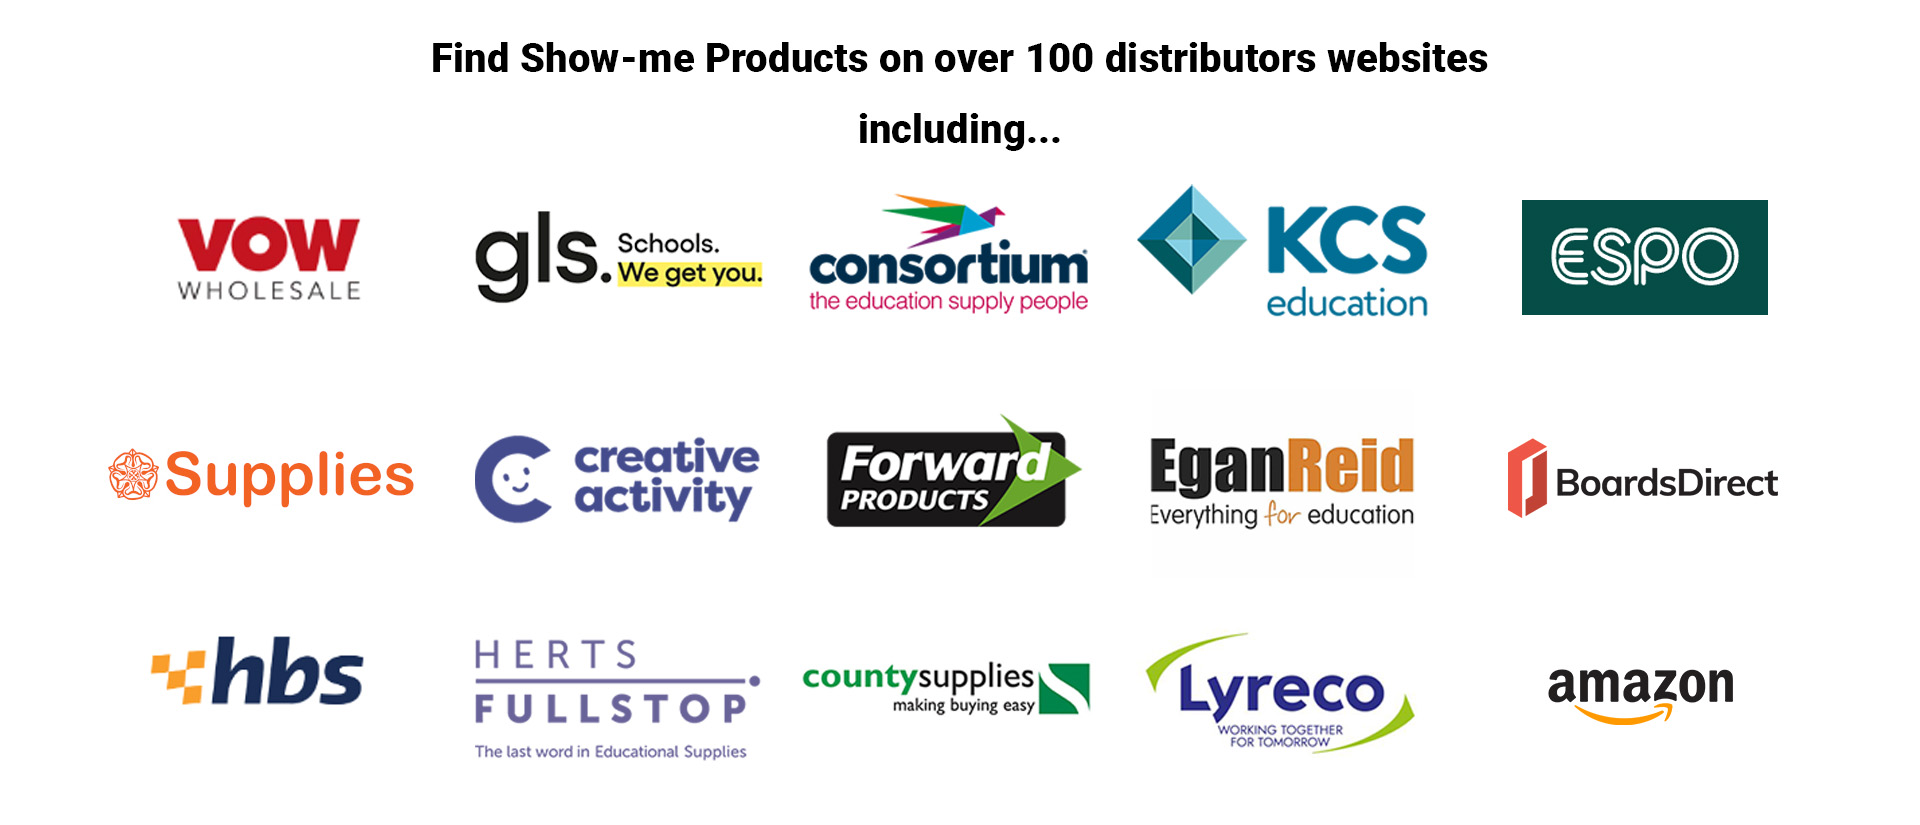 Some of the Show-me distributors logos.